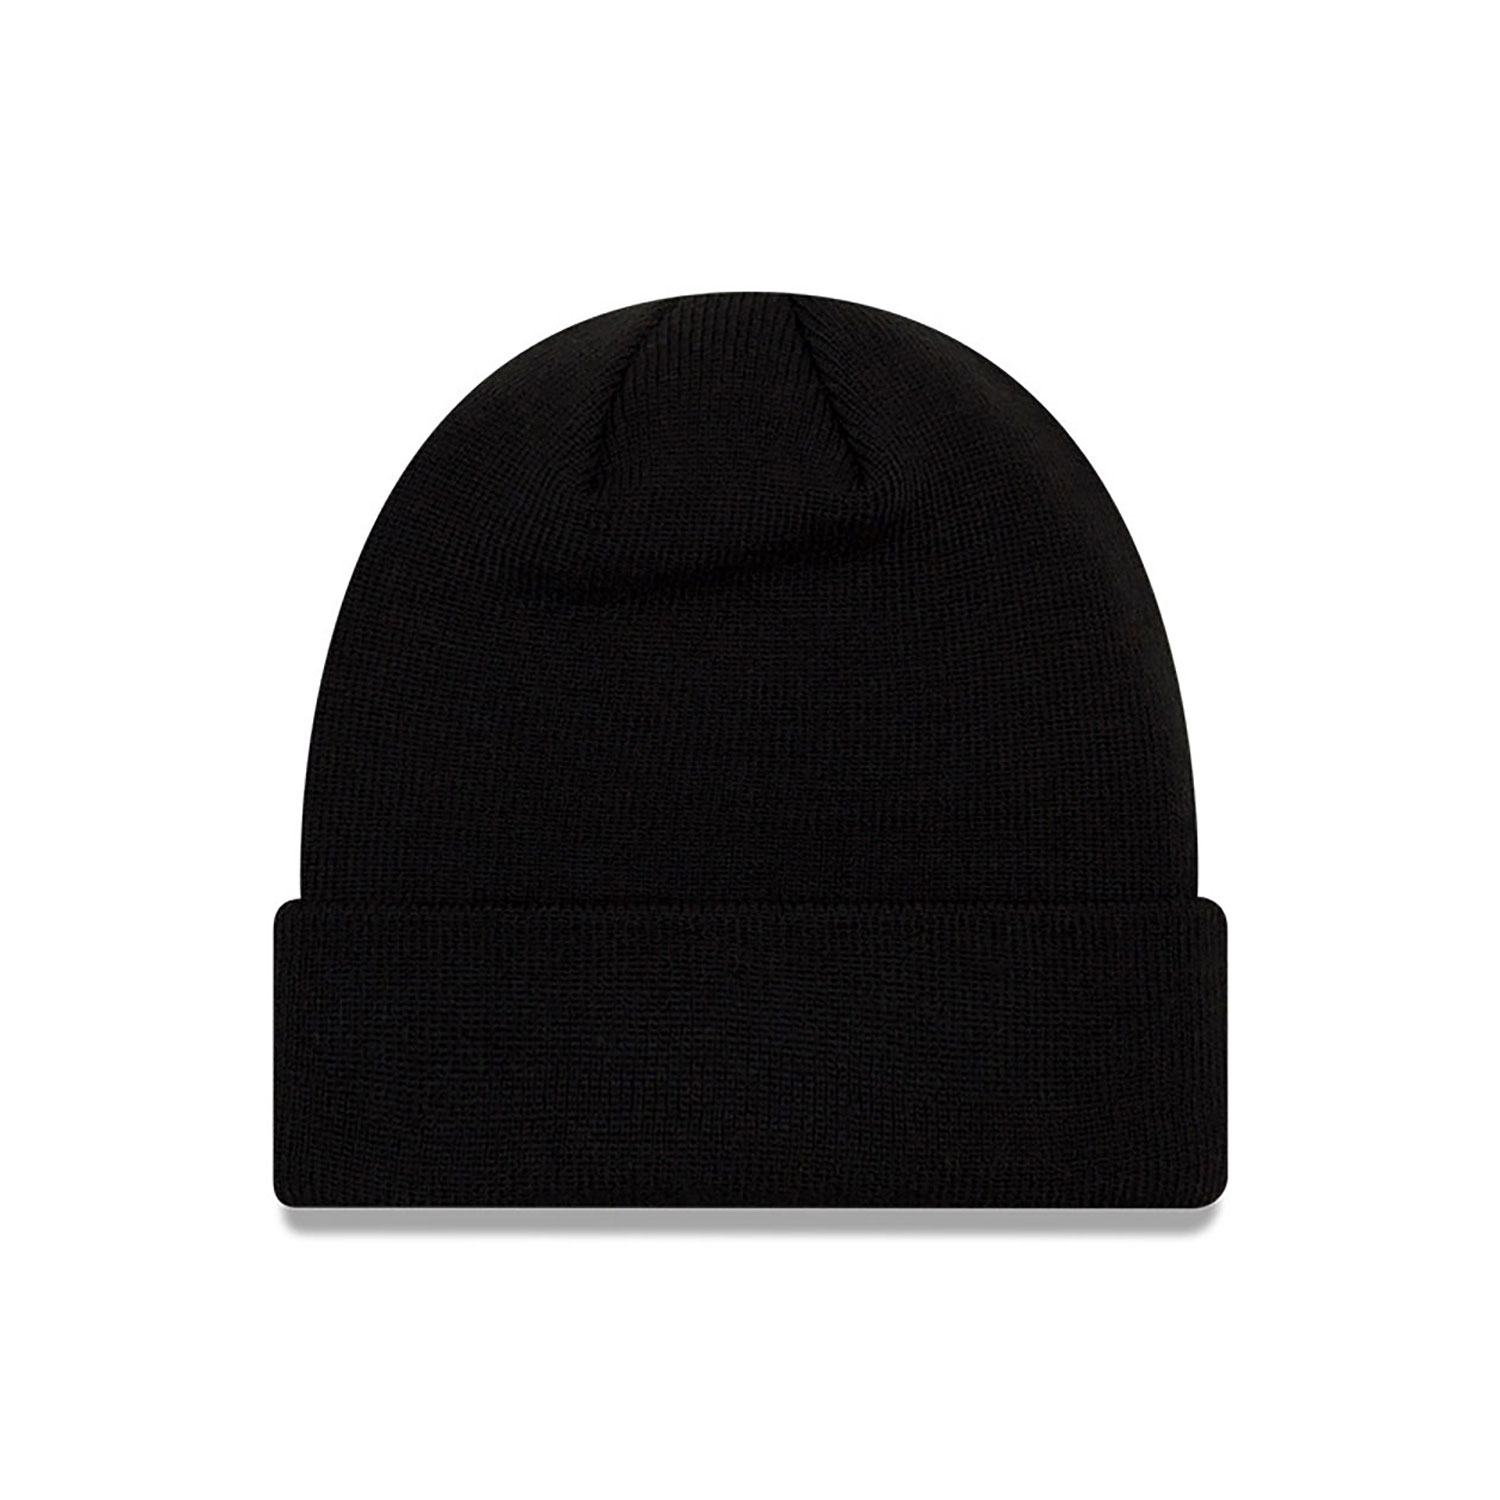 Manchester United FC Black Cuff Knit Beanie Hat